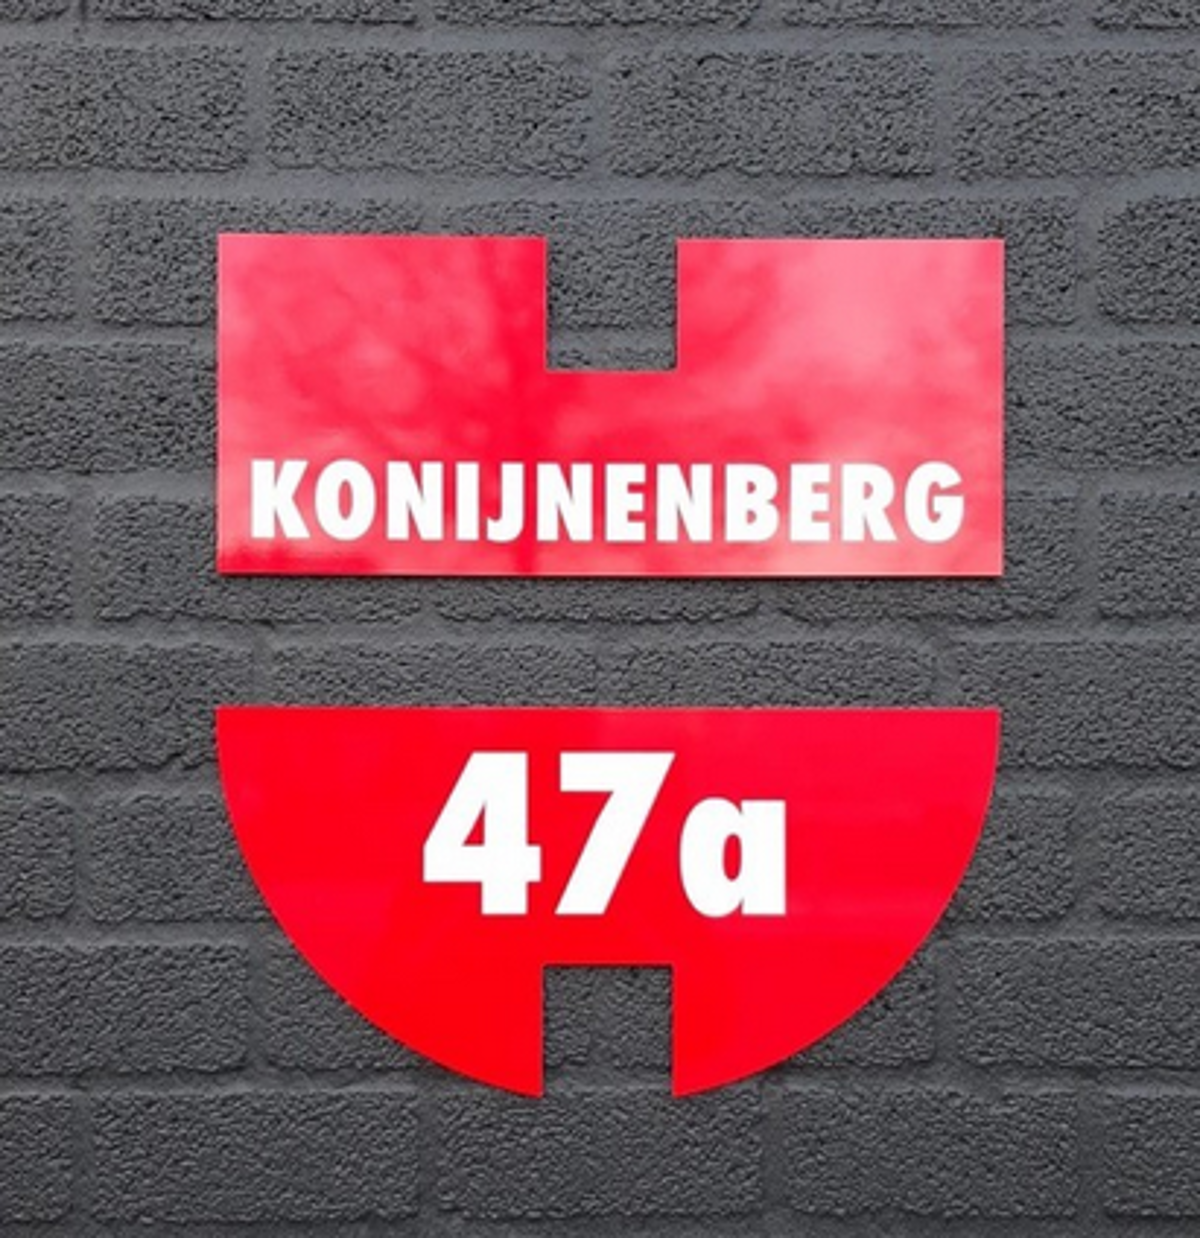 Konijnenberg